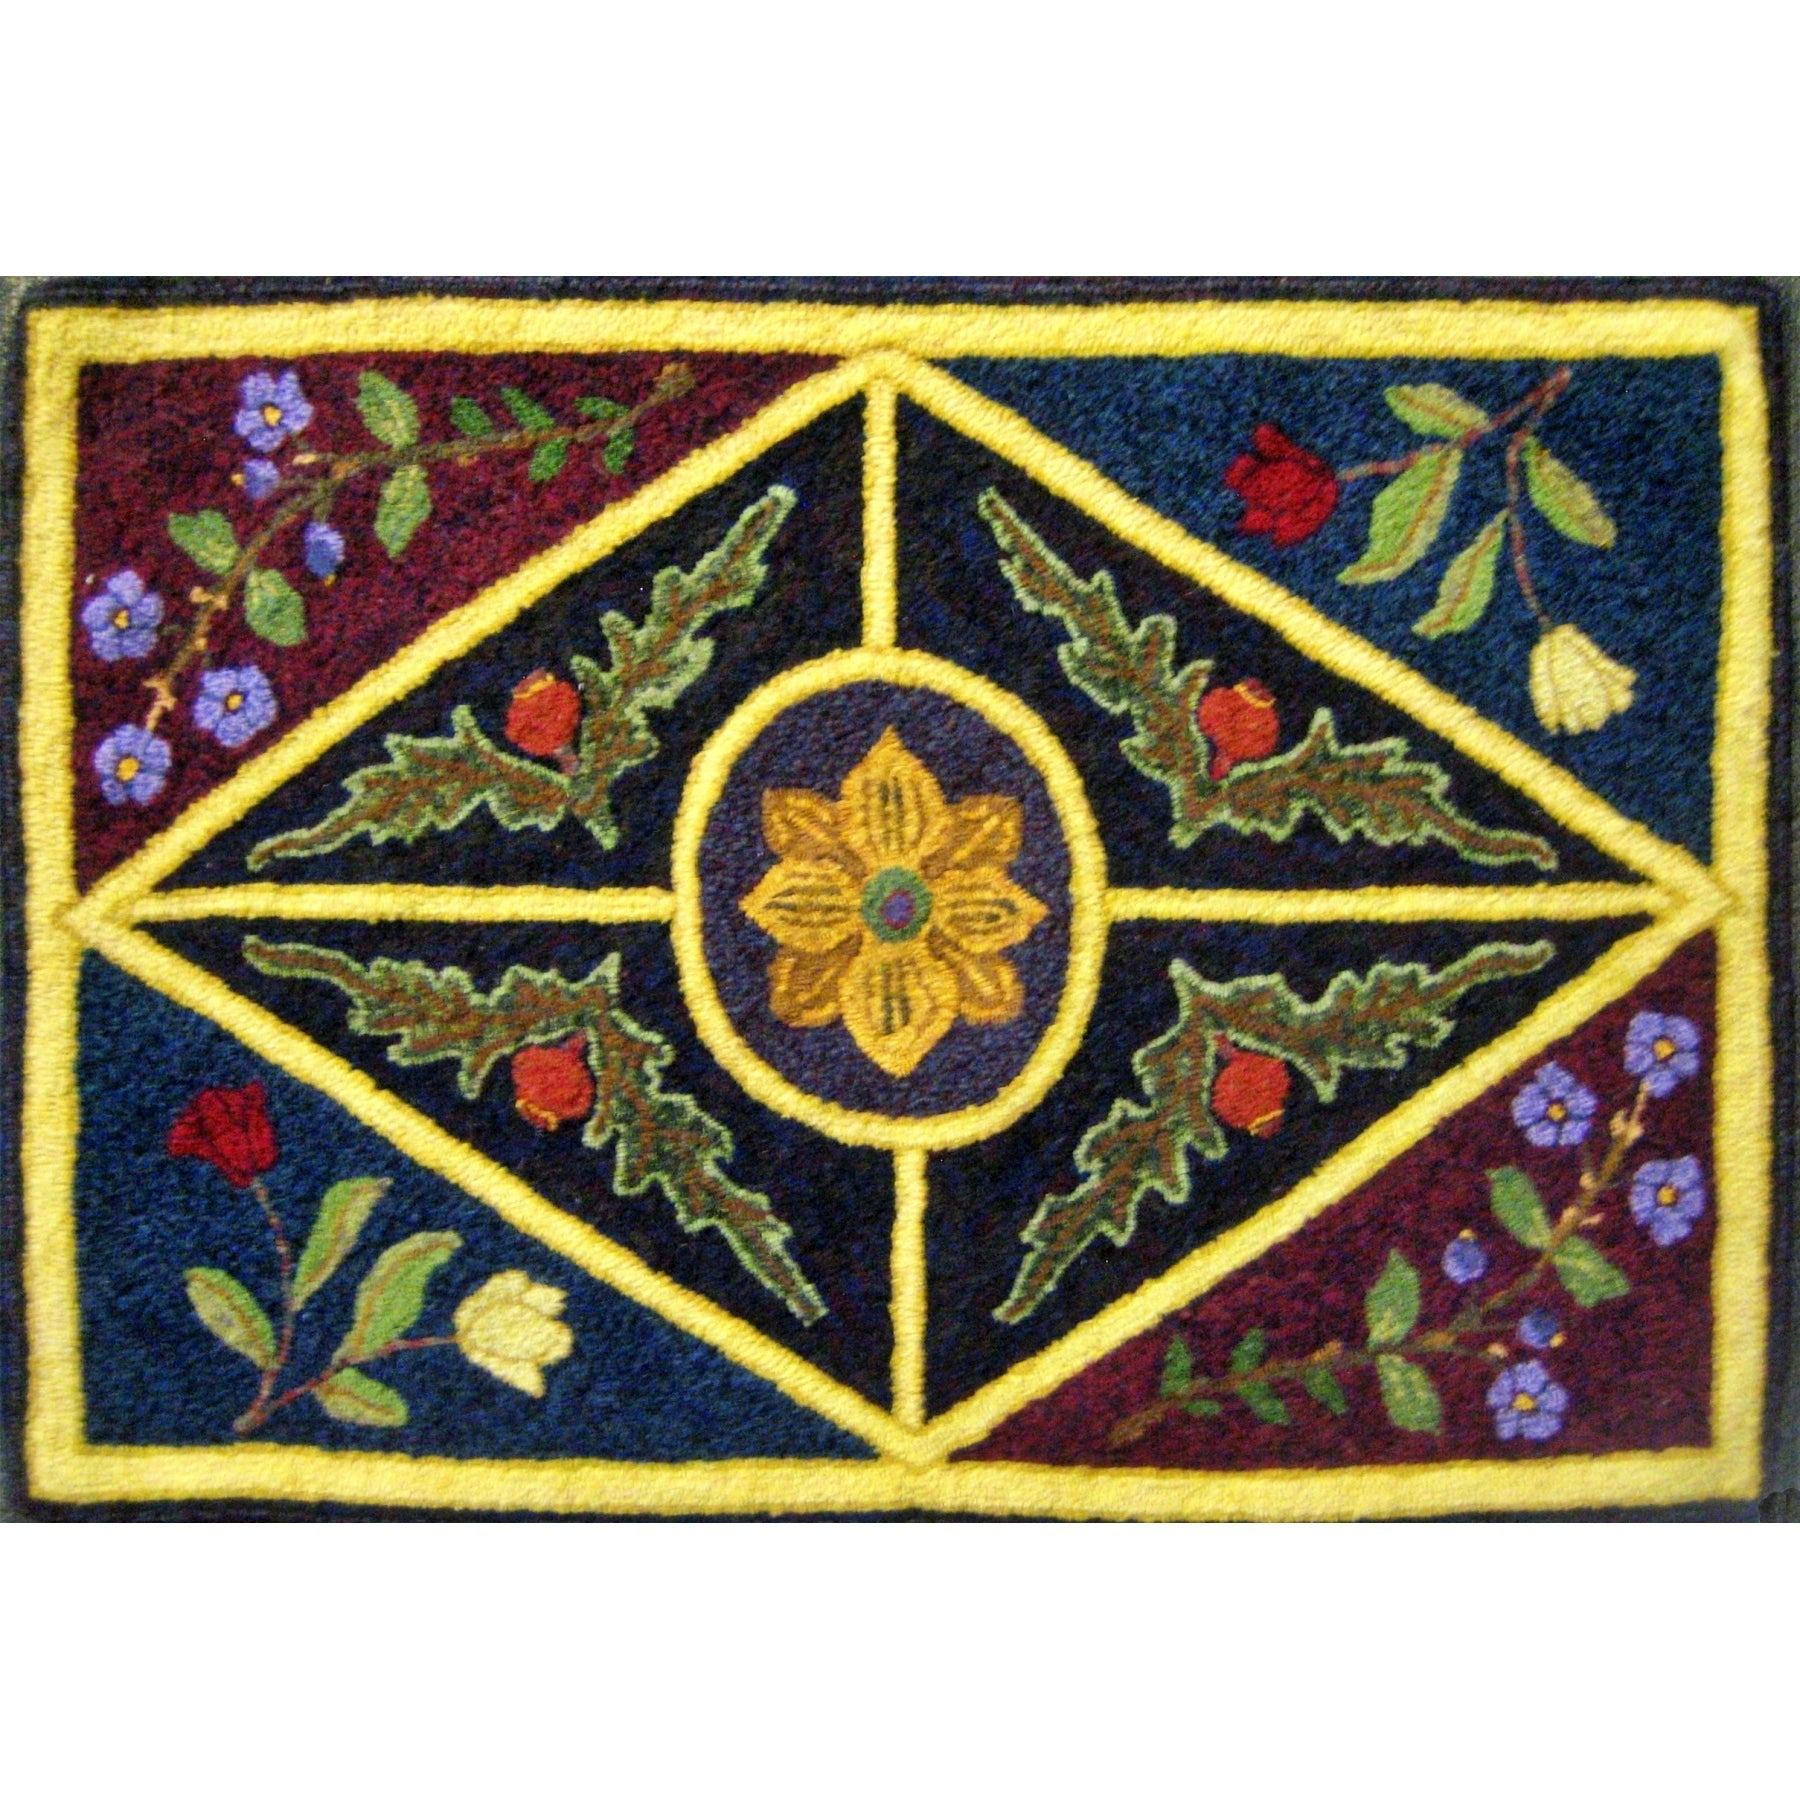 Illumination With Flora, rug hooked by John Leonard